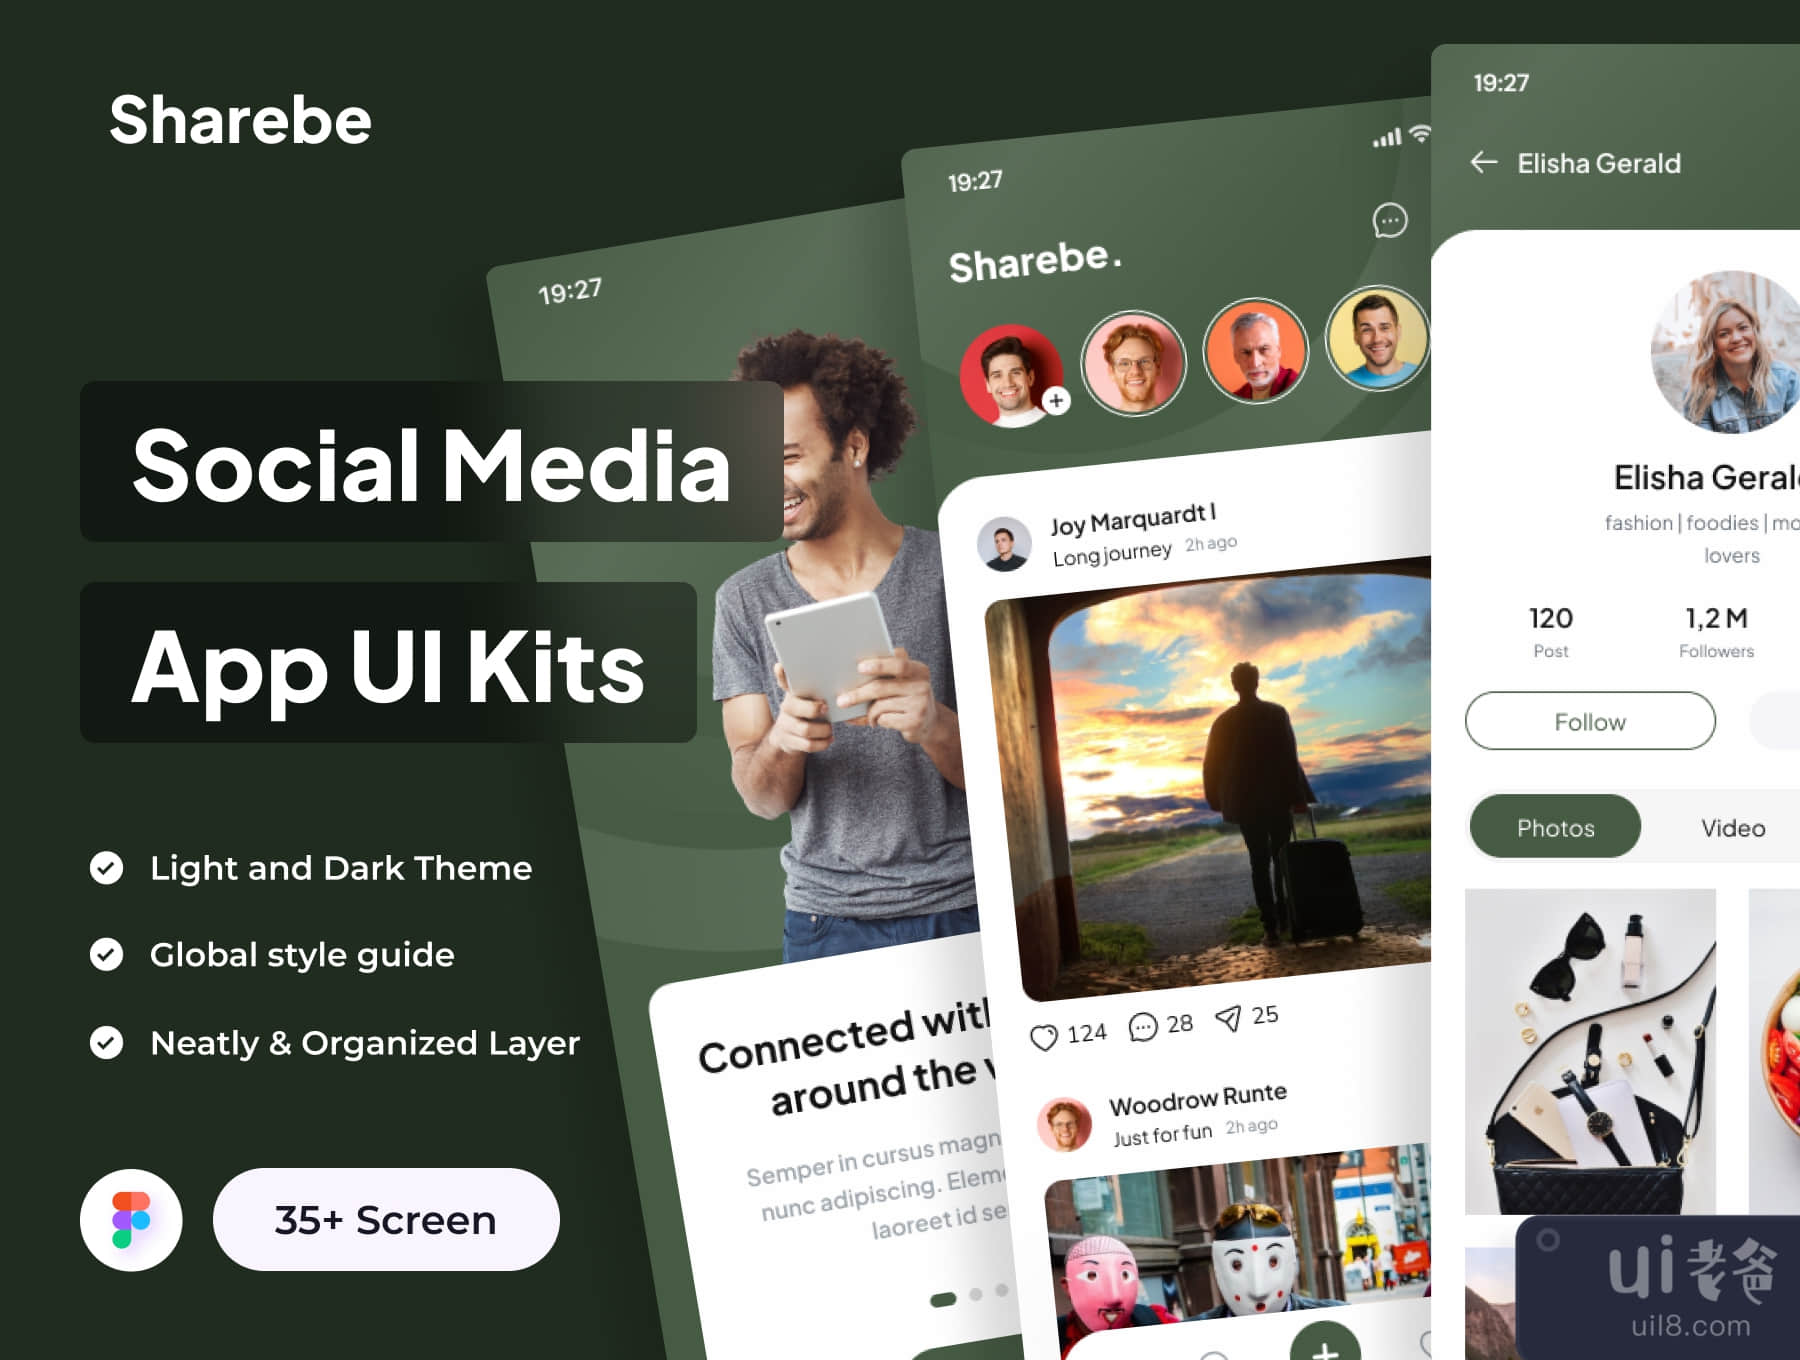 Sharebe - 社交媒体应用程序UI套件 (Sharebe - Social Media App UI Kits)插图